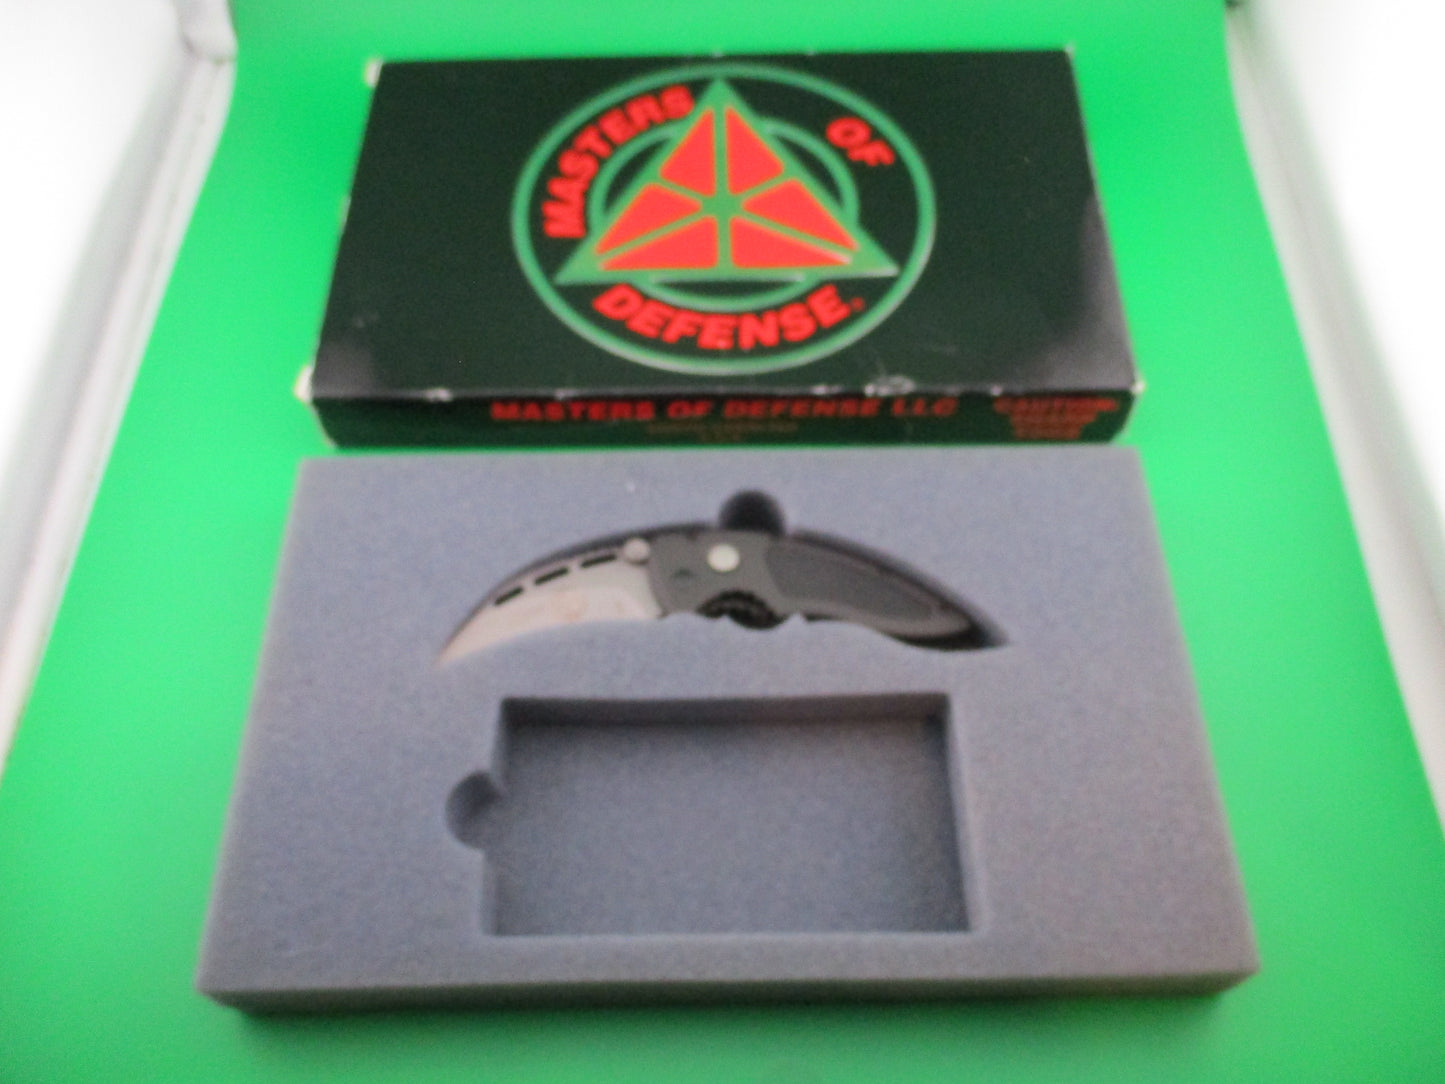 Masters of Defense Graciella Casillas Boggs Black belt Ladyhawk automatic knife in box